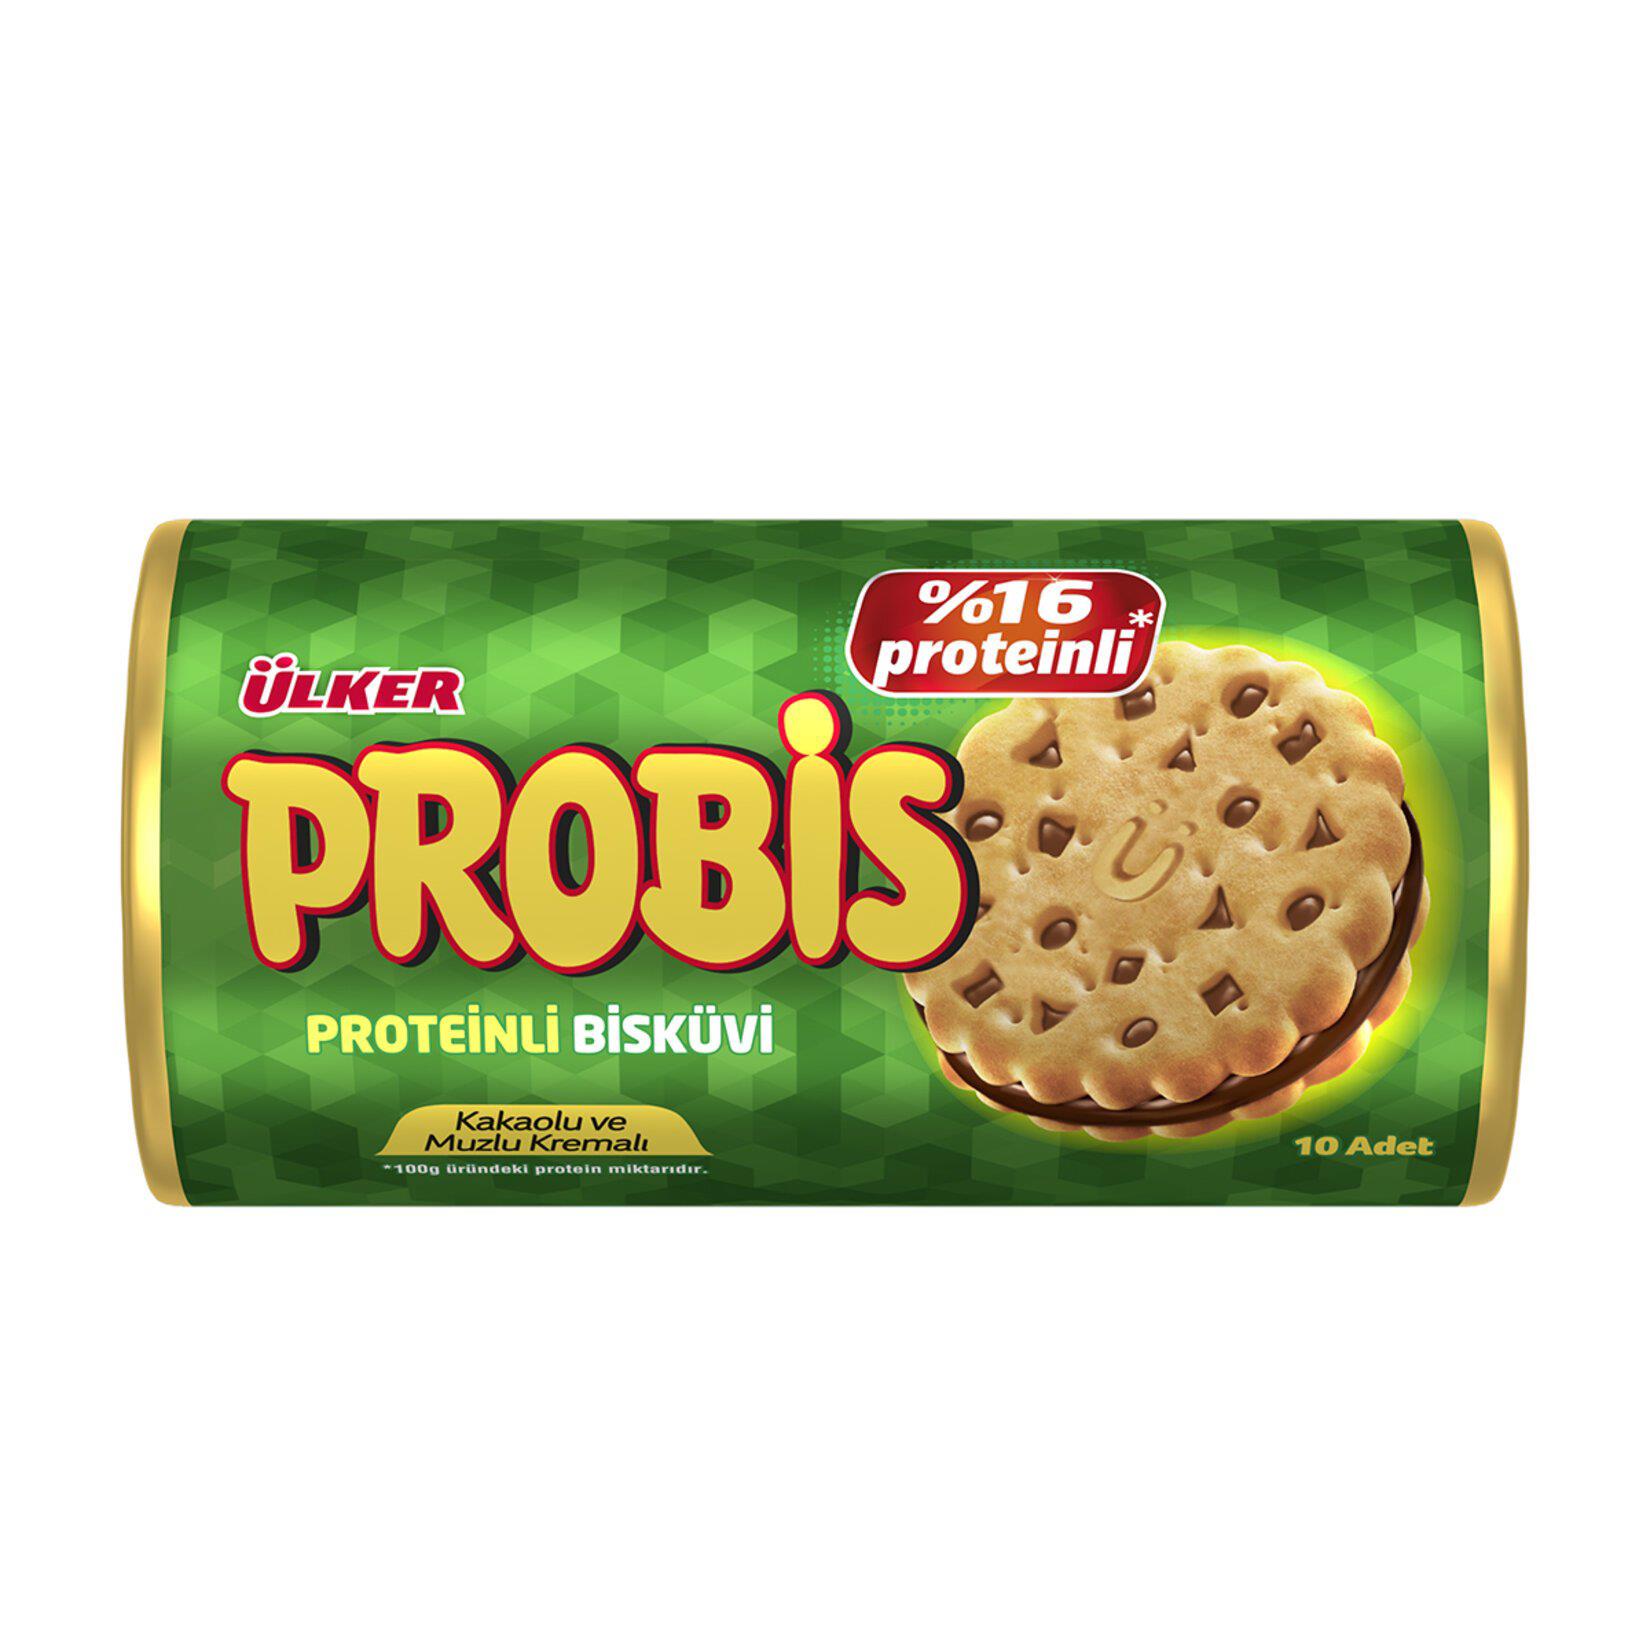 Ülker Probis Proteinli Bisküvi 280 gr - Onur Market